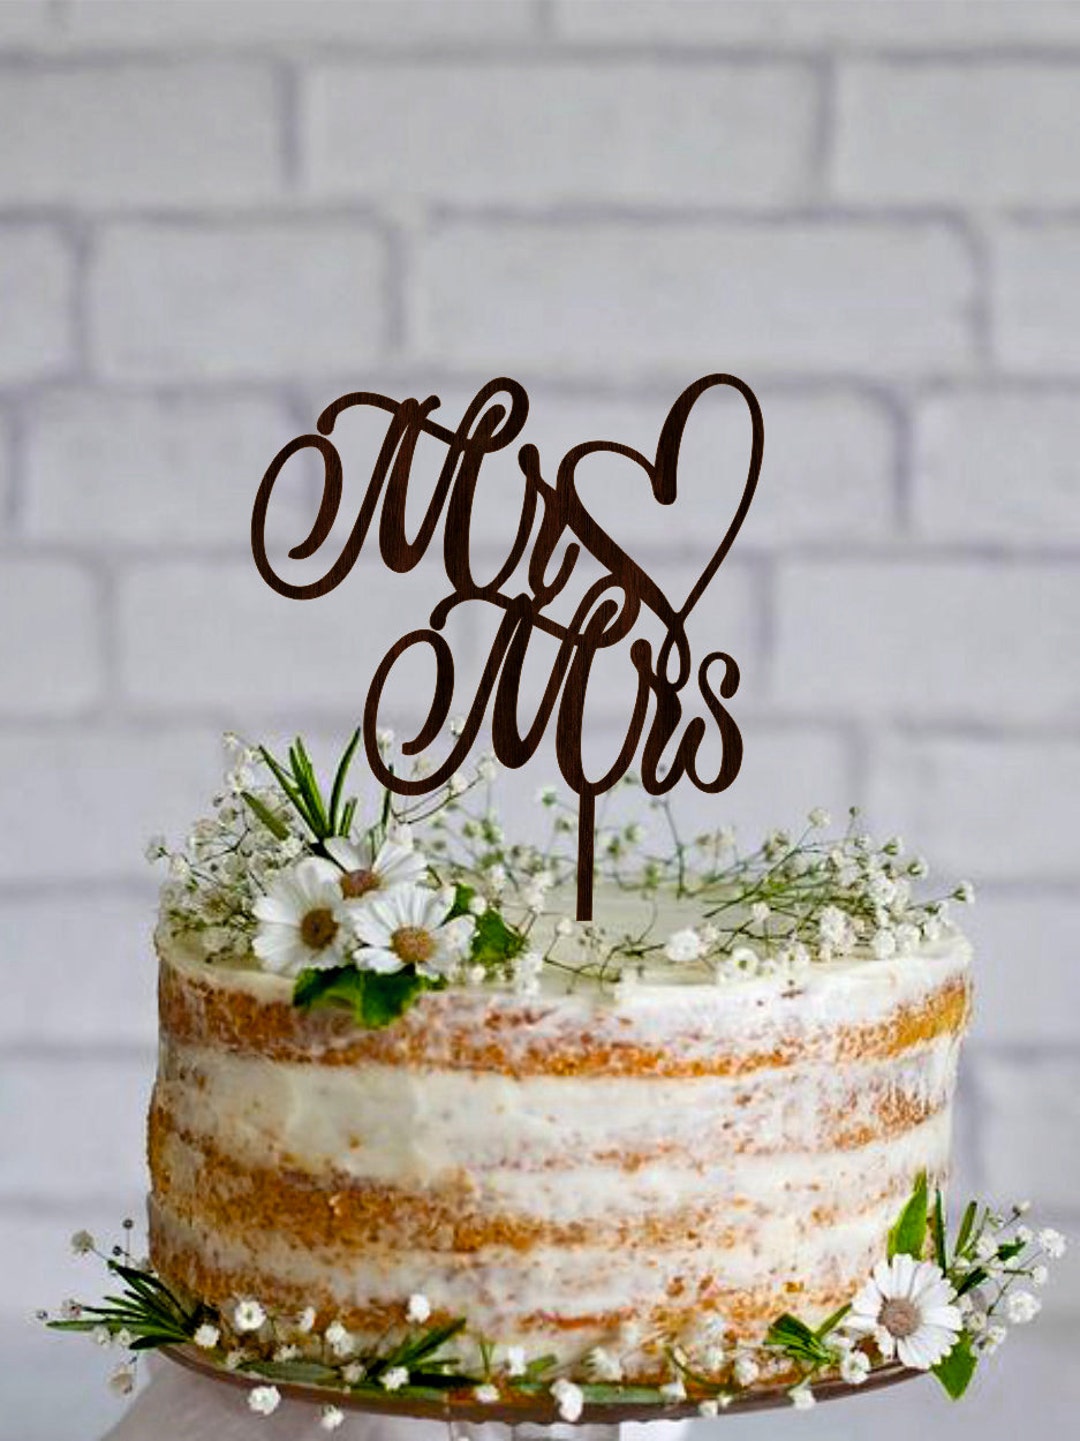 Gold Mr & Mr Cake Topper, Gold Cake Decorations, Mr and Mr Wedding Cake  Decorations, Rustic Wedding -  Sweden